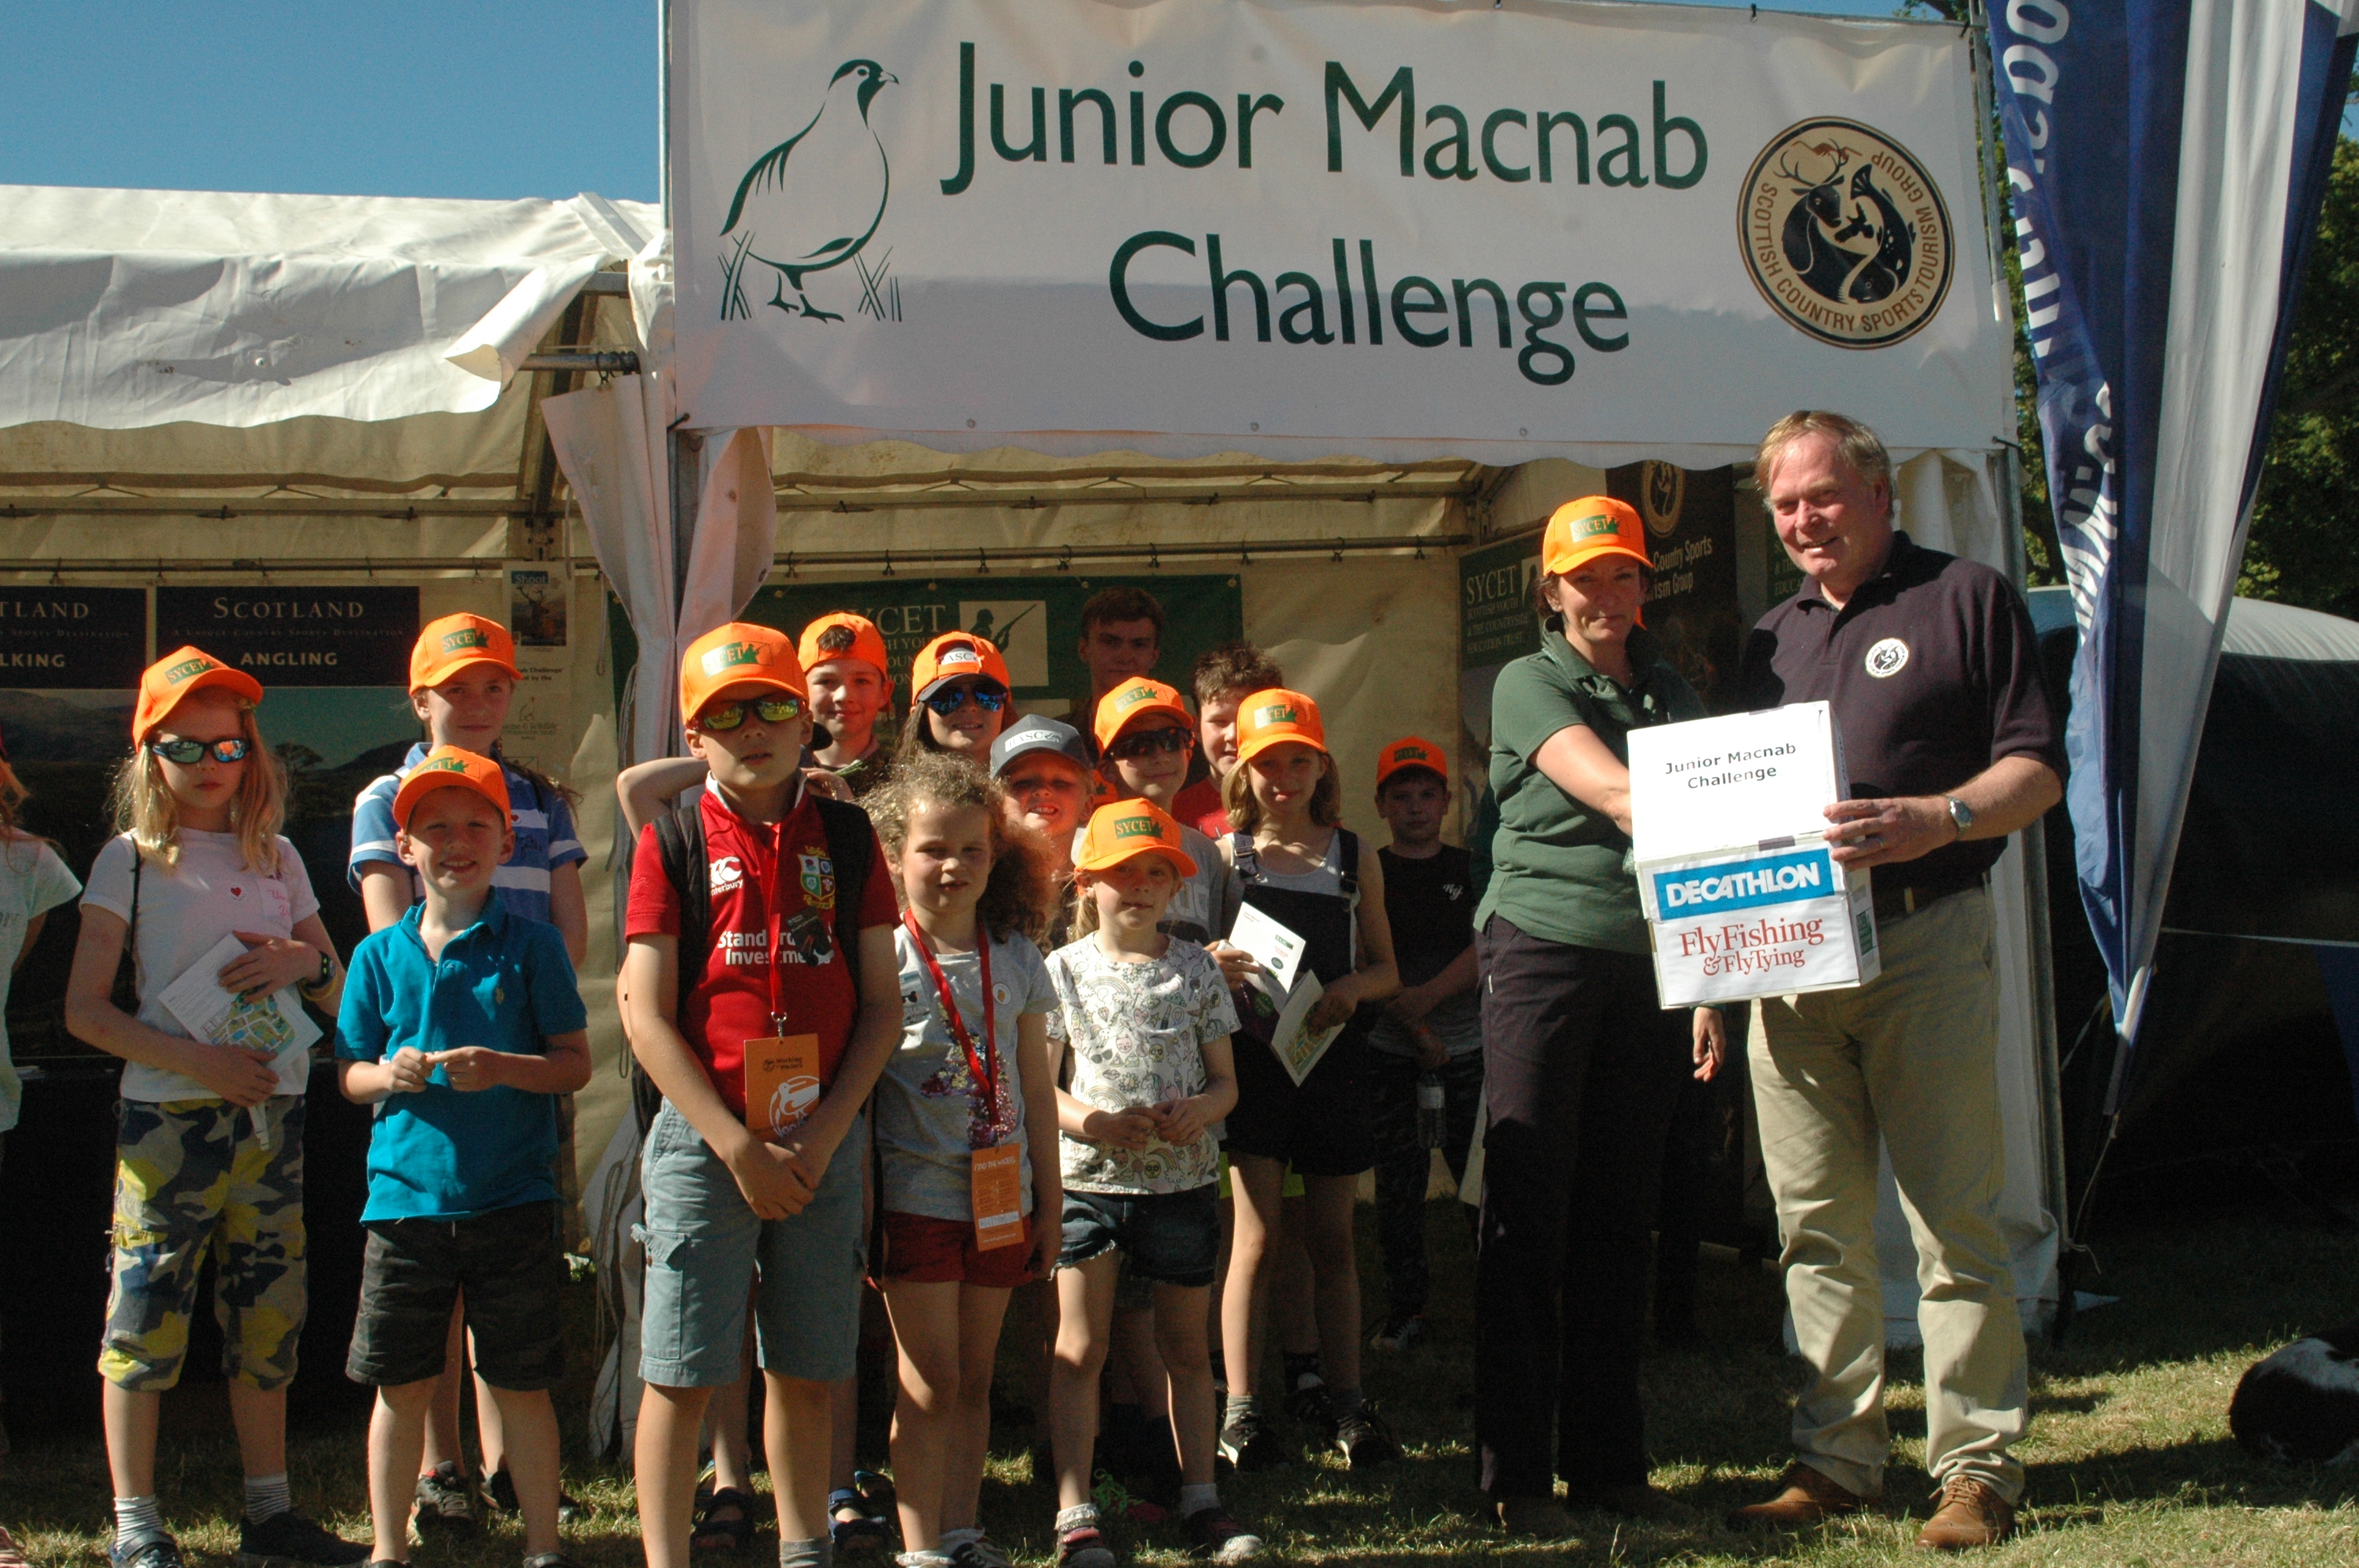 SYCET Sponsoring the Junior Macnab Challenge for 2019